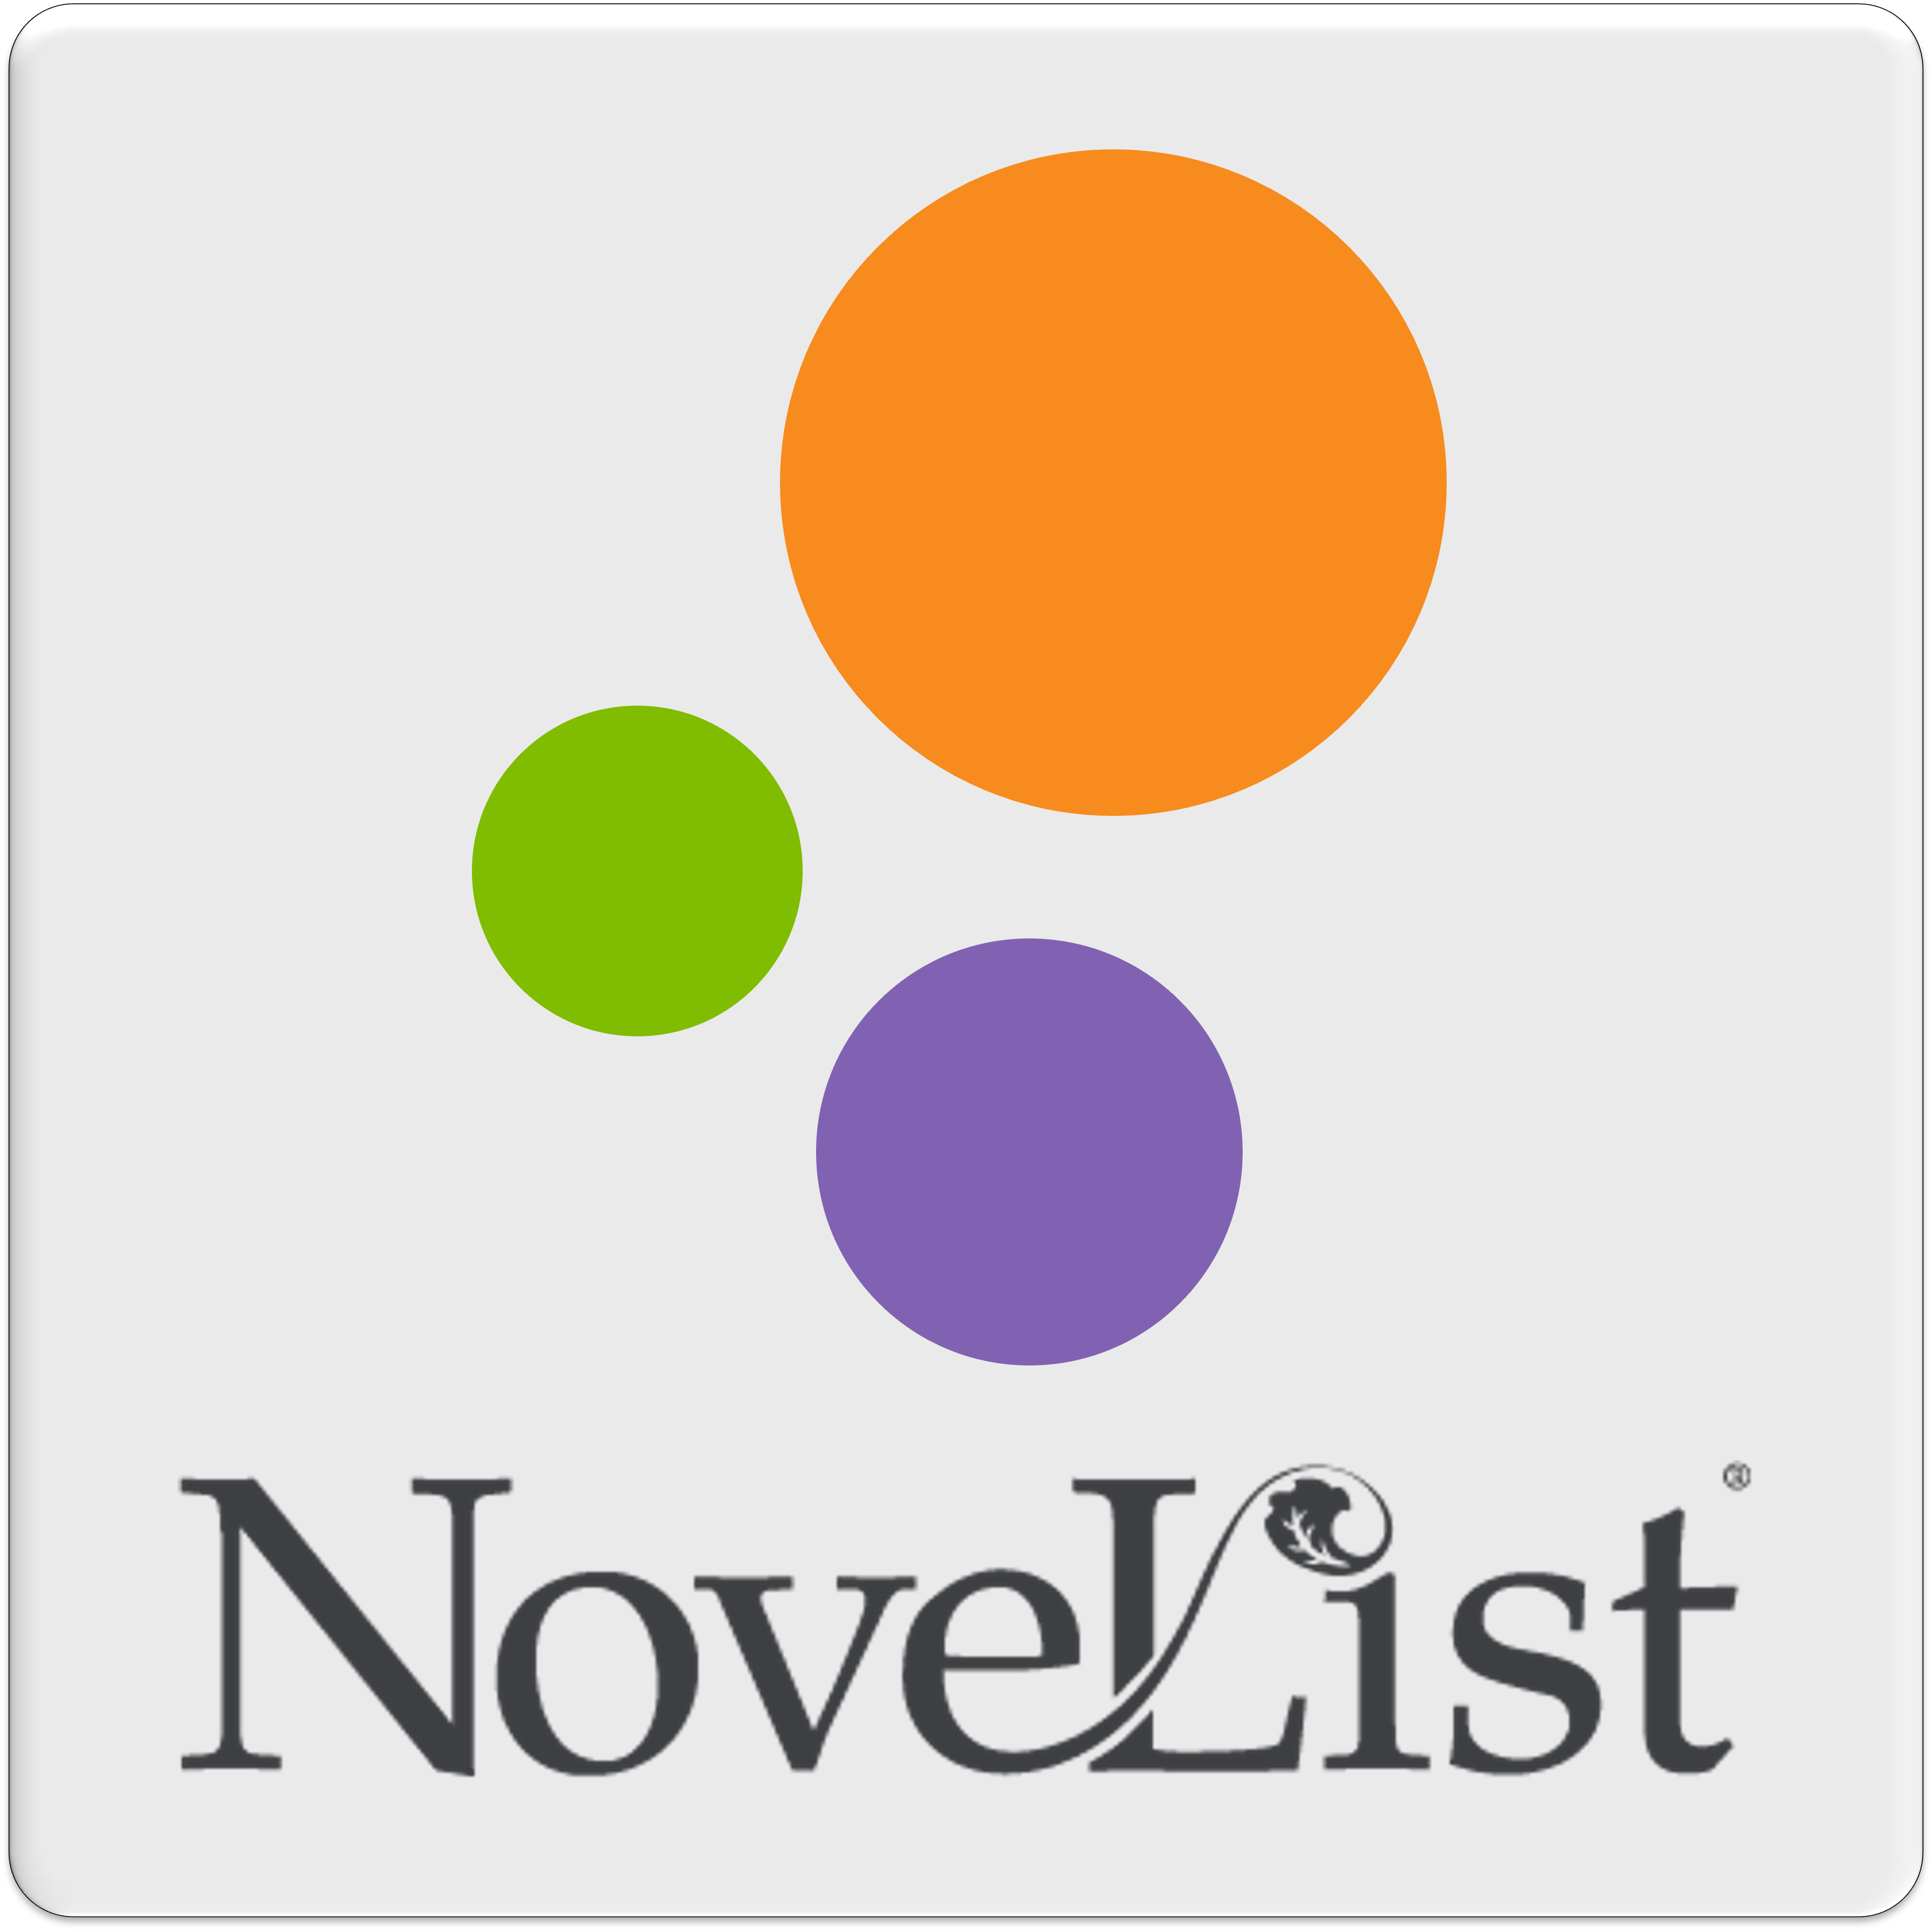 button with Novelist logo